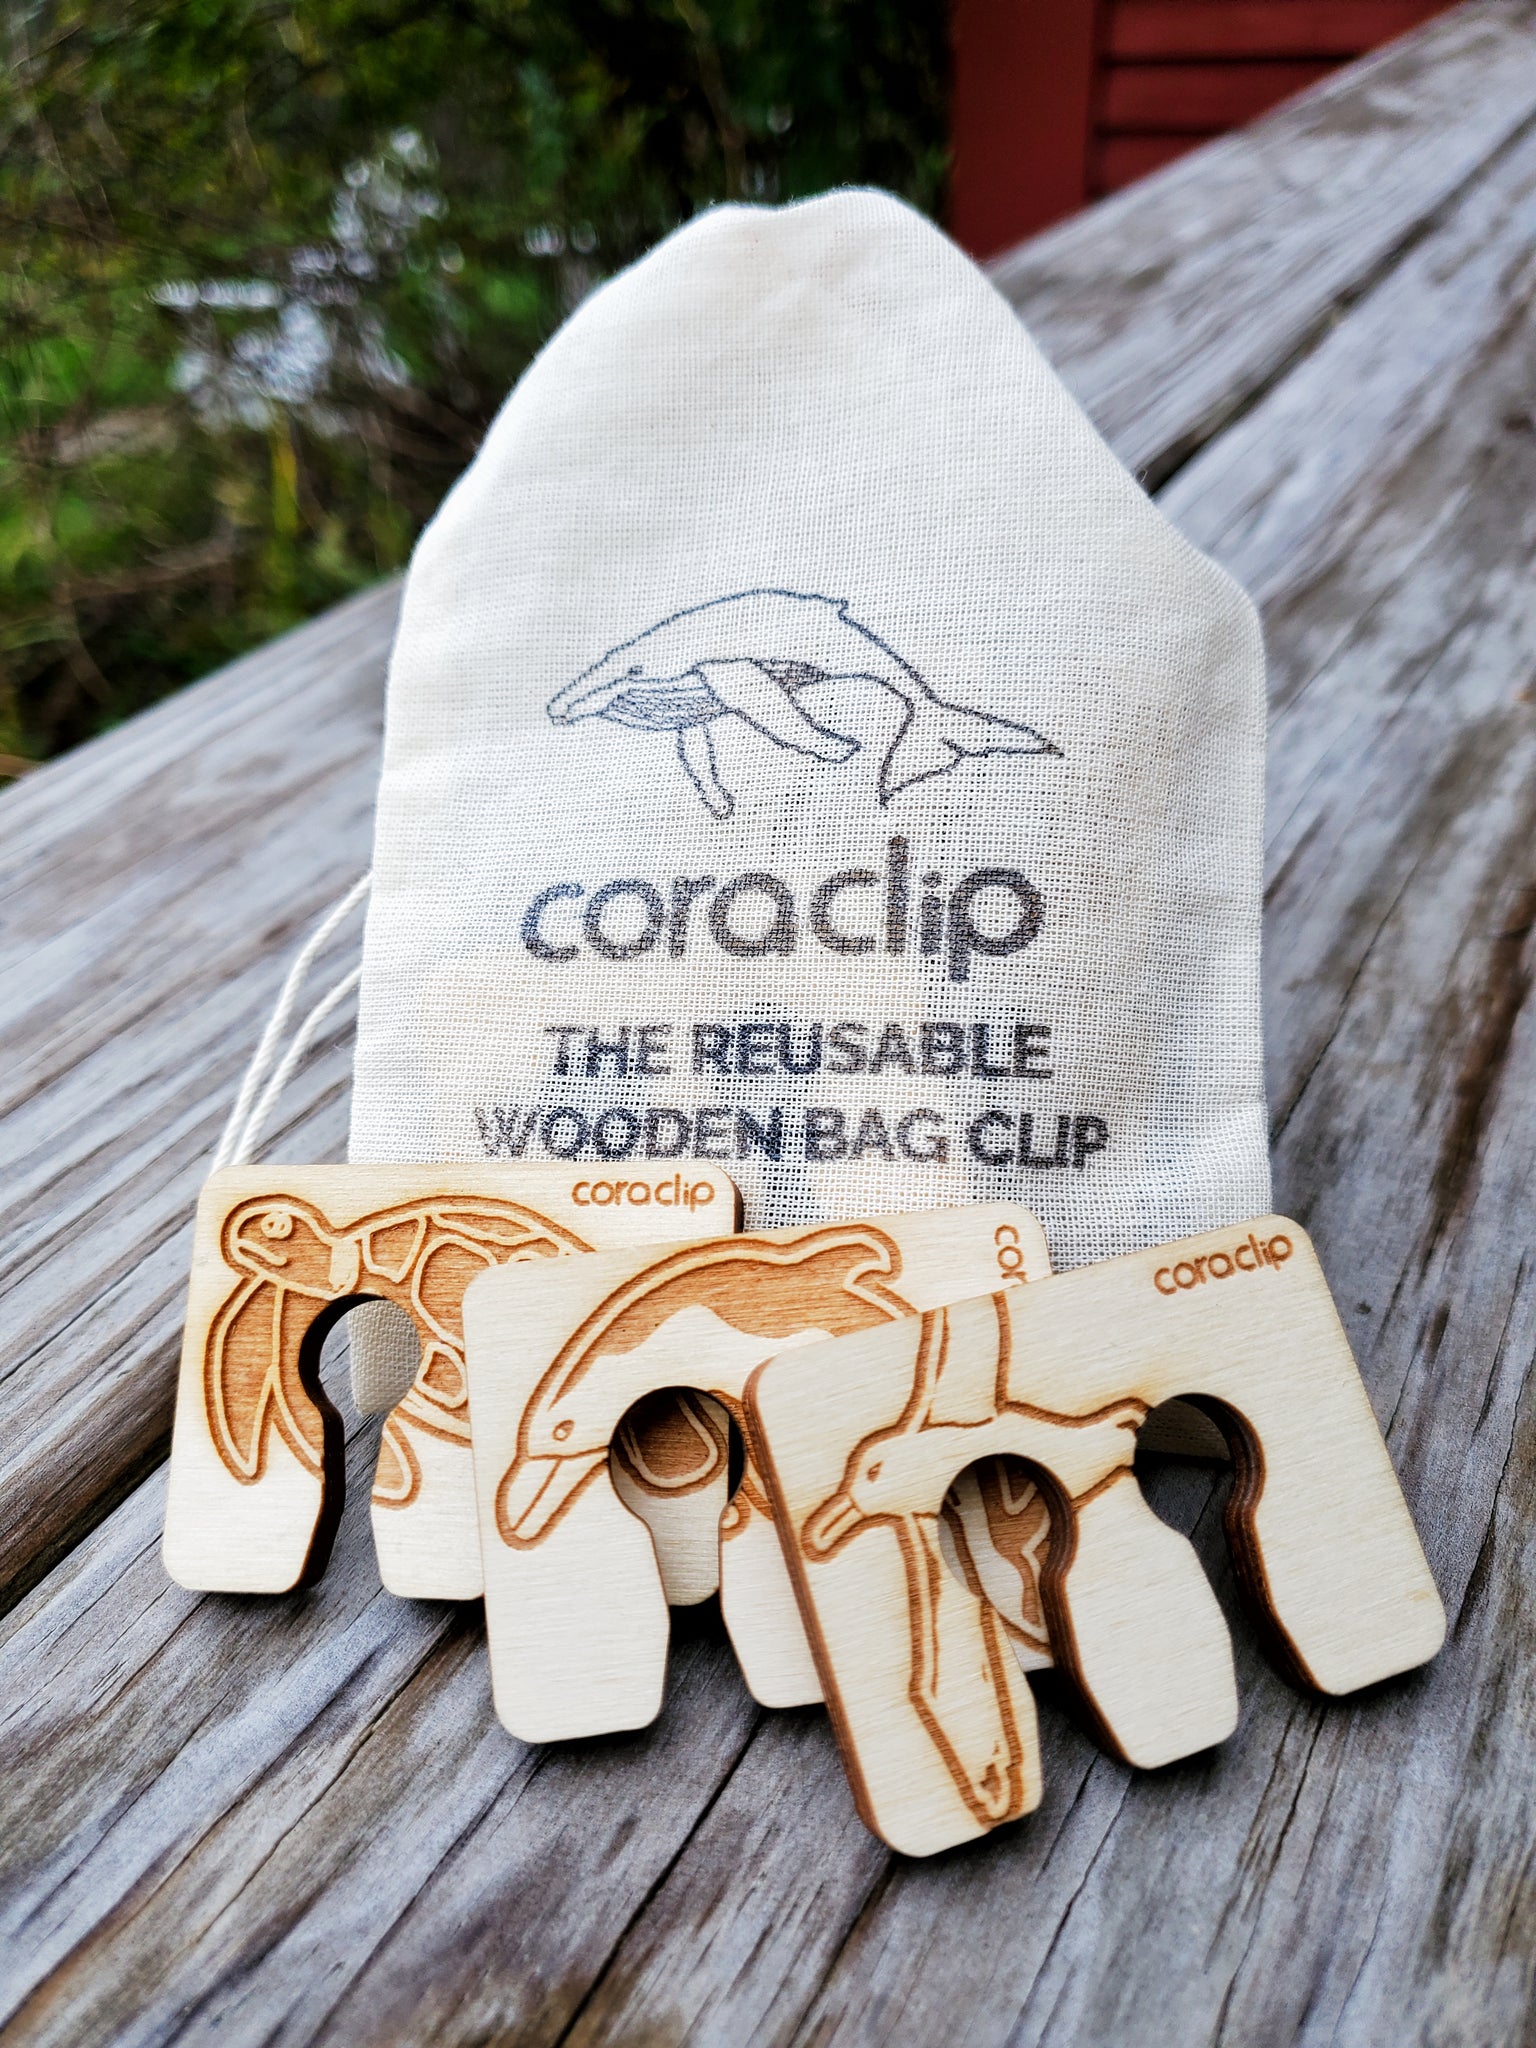 Coraclip Gift Bag – Cora Ball